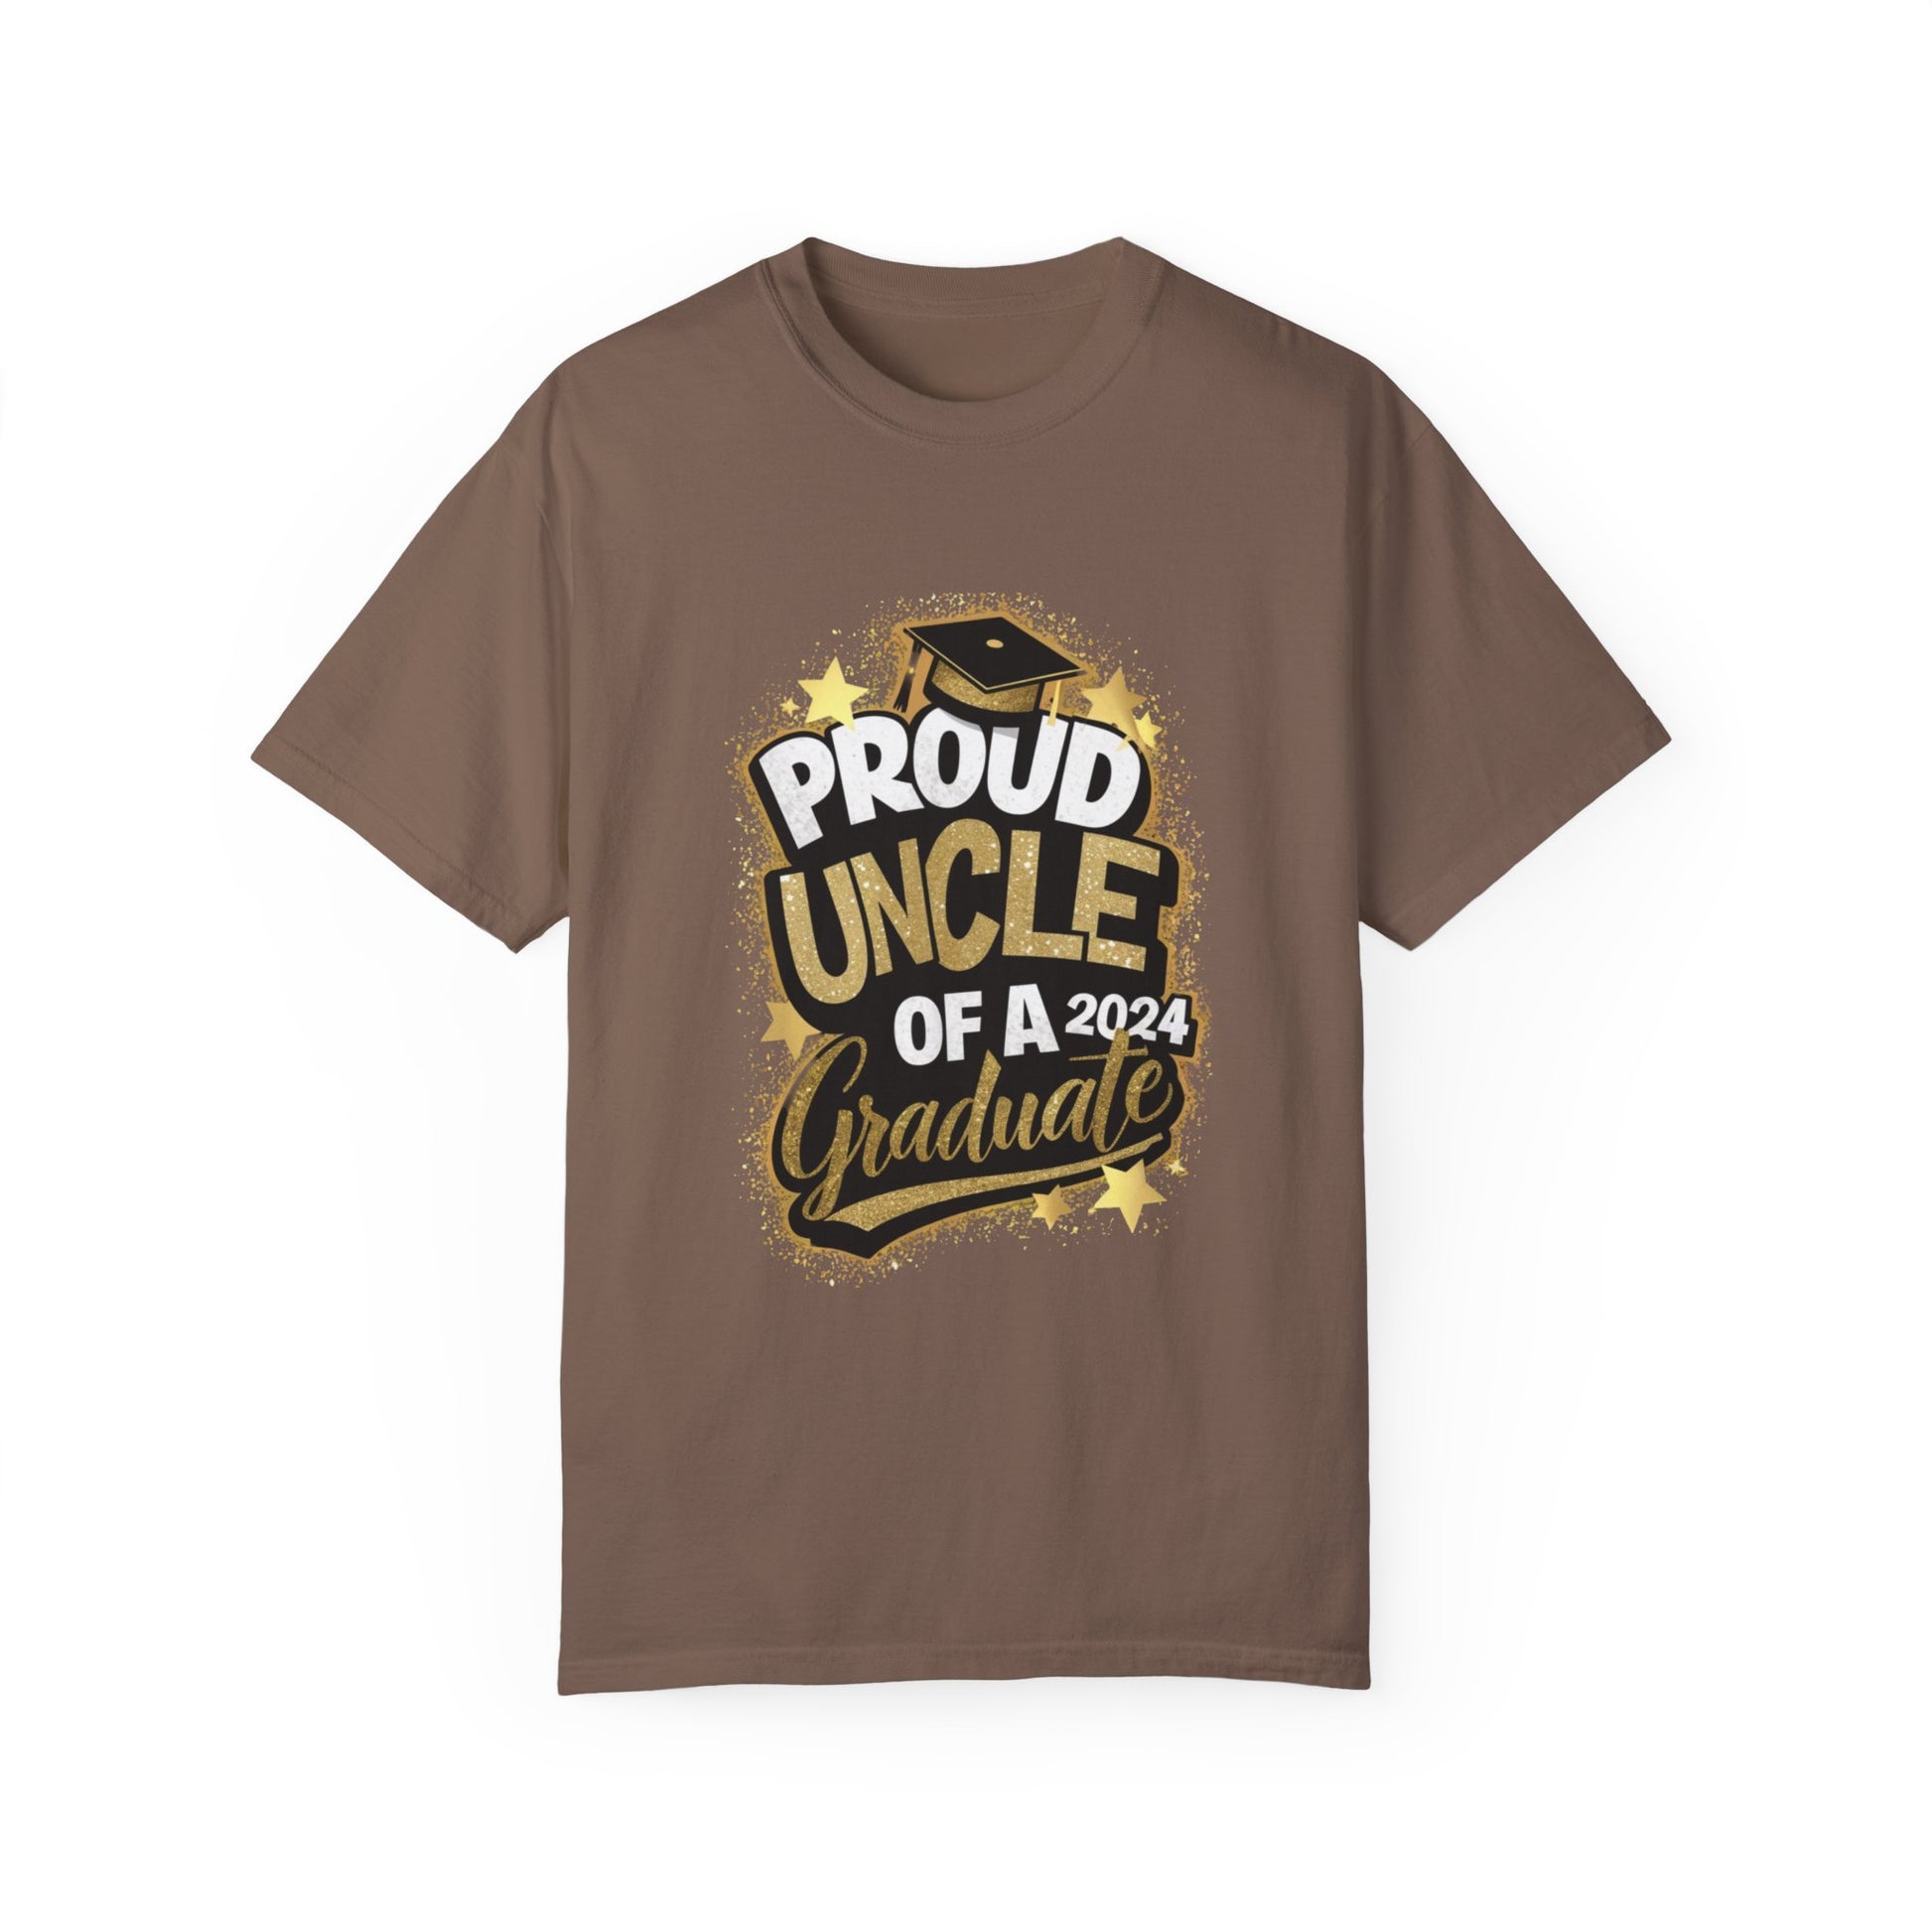 Proud Uncle of a 2024 Graduate Unisex Garment-dyed T-shirt Cotton Funny Humorous Graphic Soft Premium Unisex Men Women Espresso T-shirt Birthday Gift-15